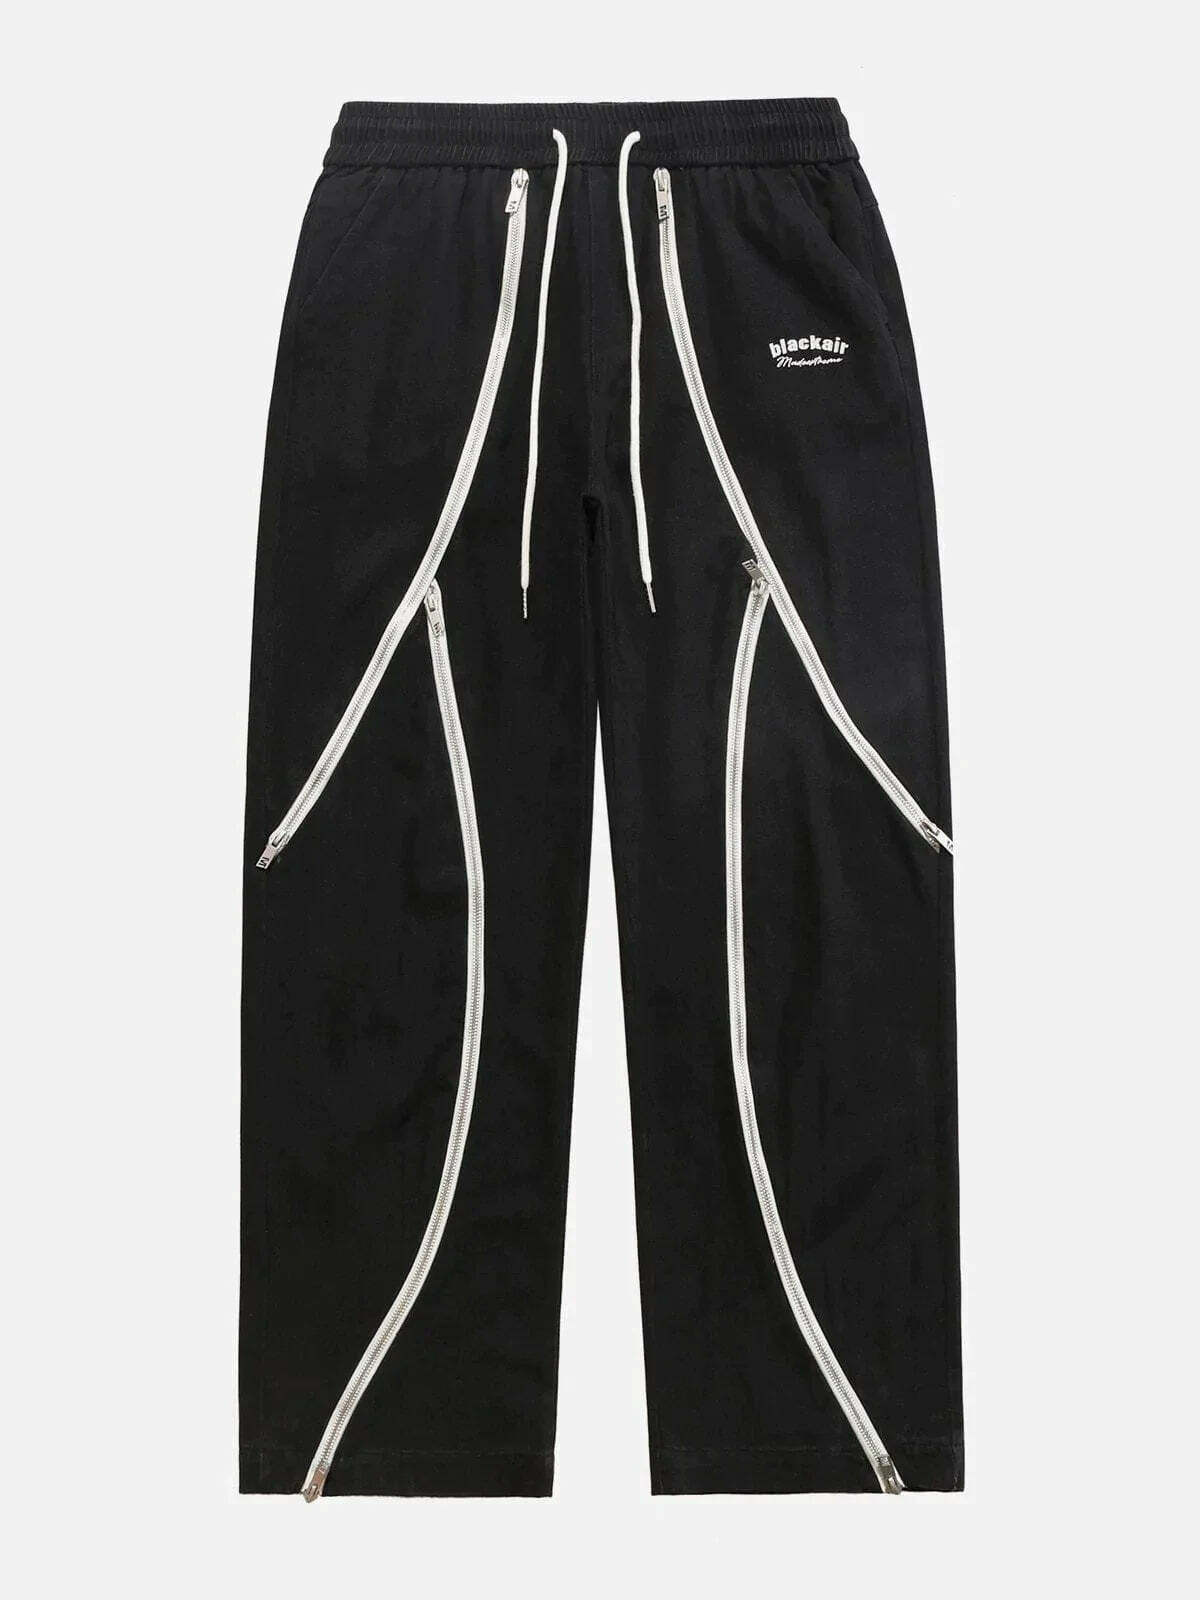 zipperembellished cargo pants edgy streetwear essential 4690